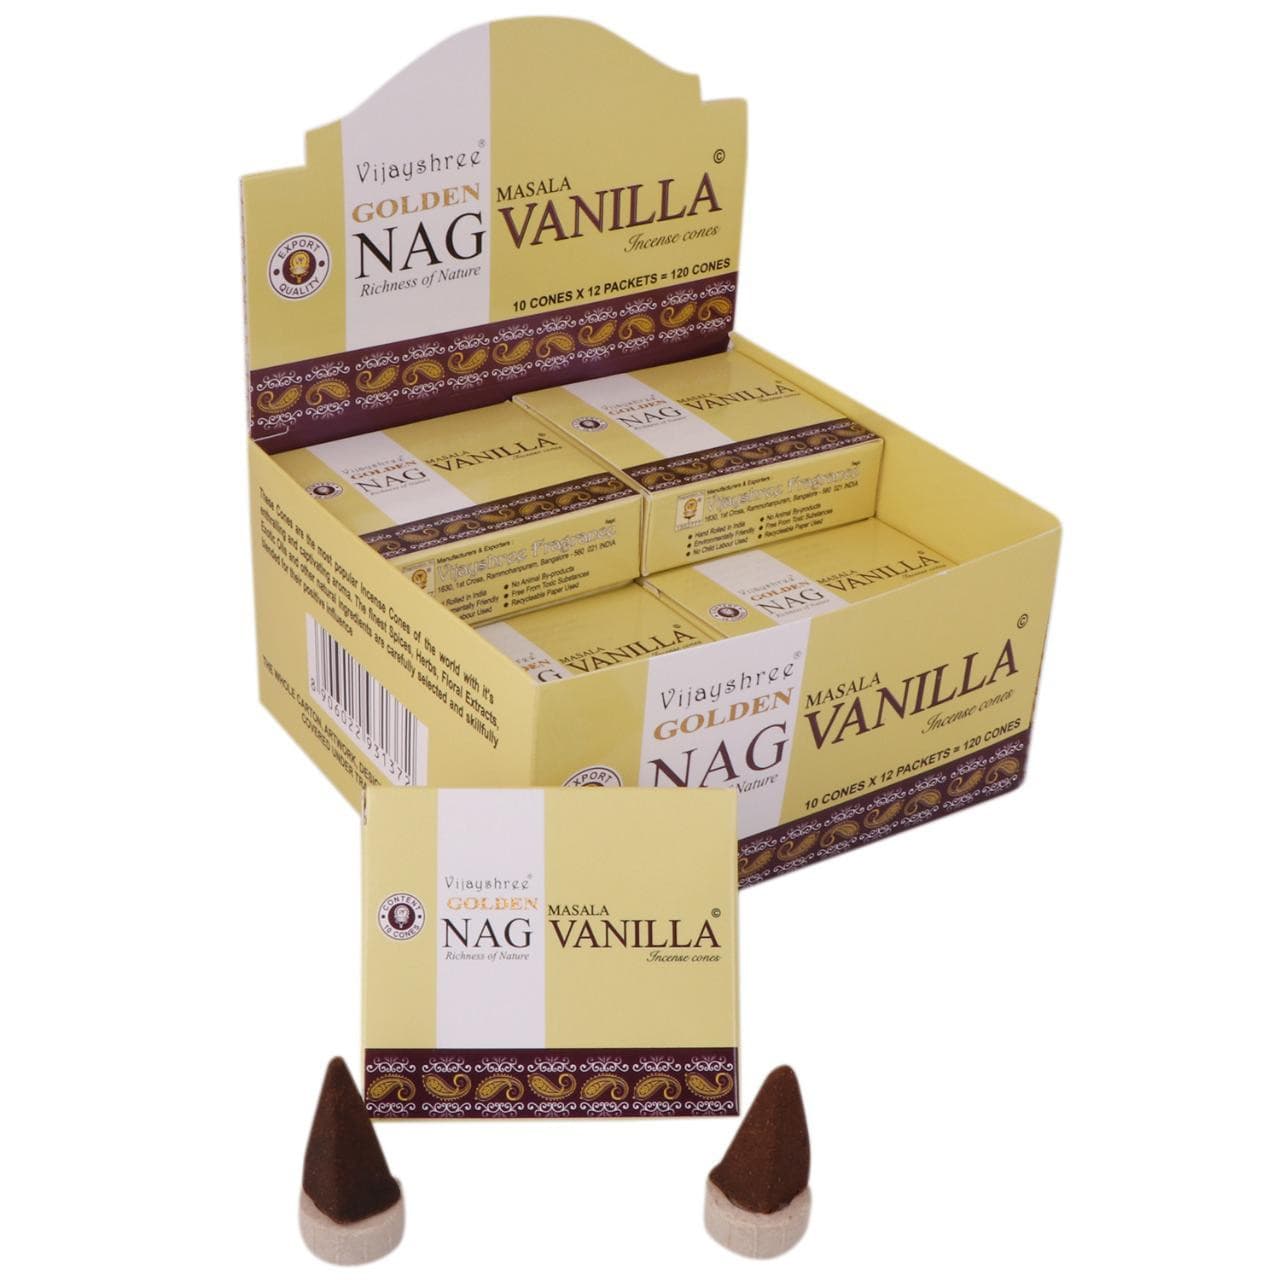 Vijayshree Nag Vanilla Incense Cones.